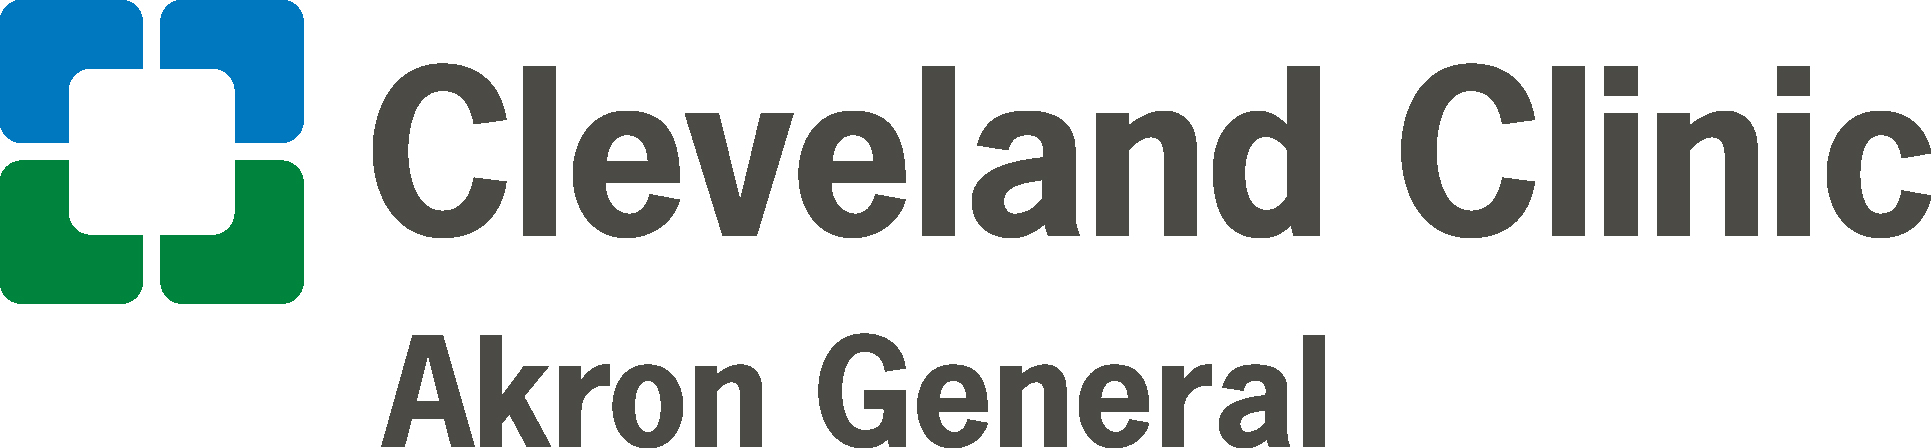 C. Cleveland Clinic Akron General (Seleccionar)